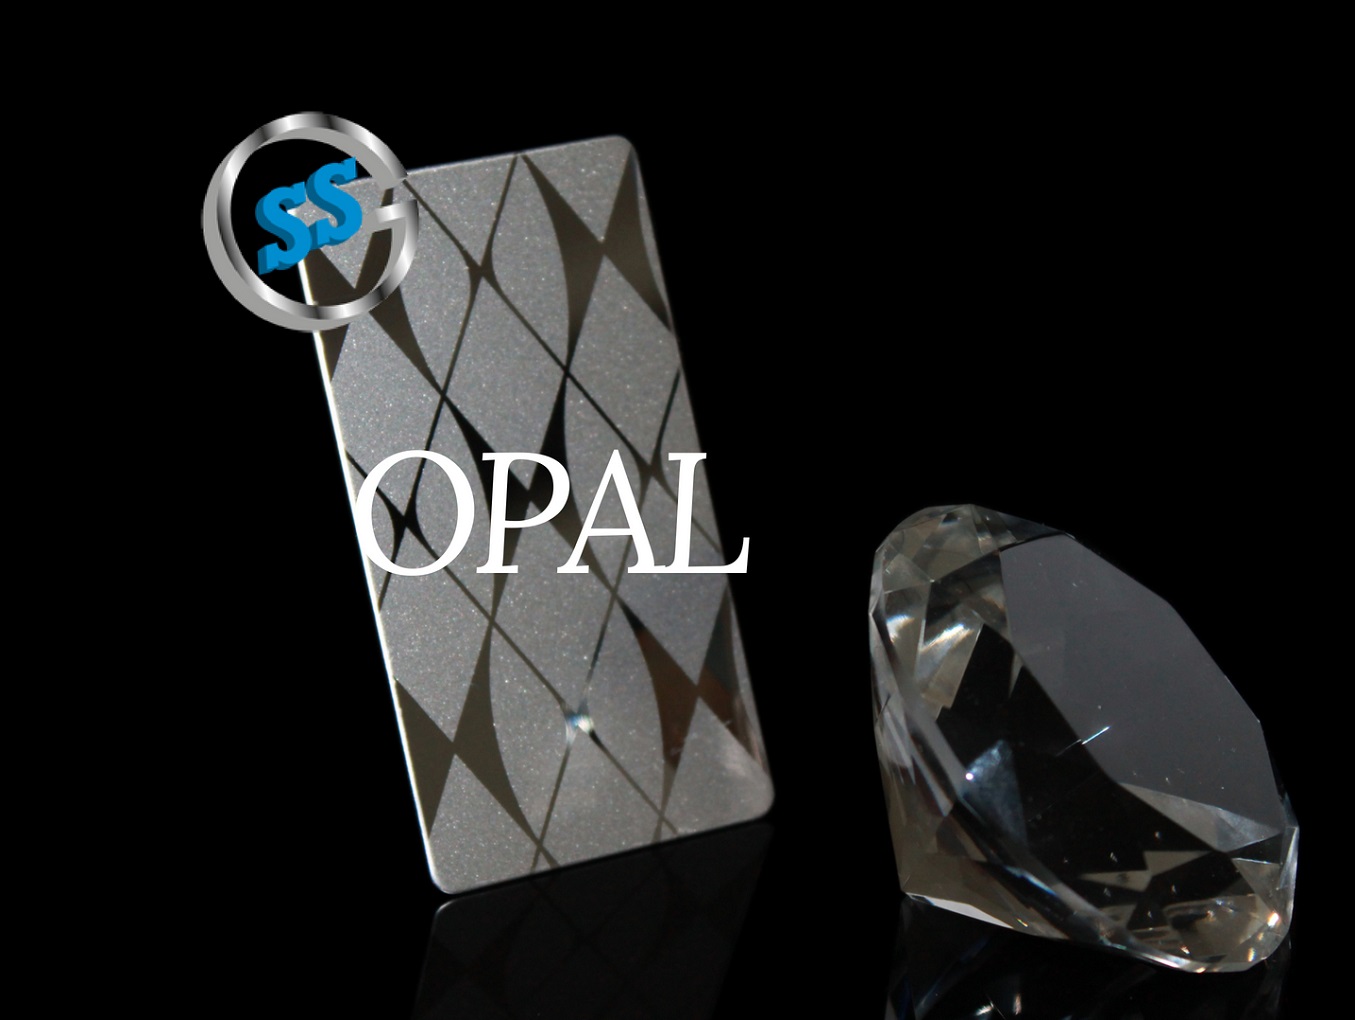 inox MetalArt, inox SuperMirror MetalArt, MetalArt Opal